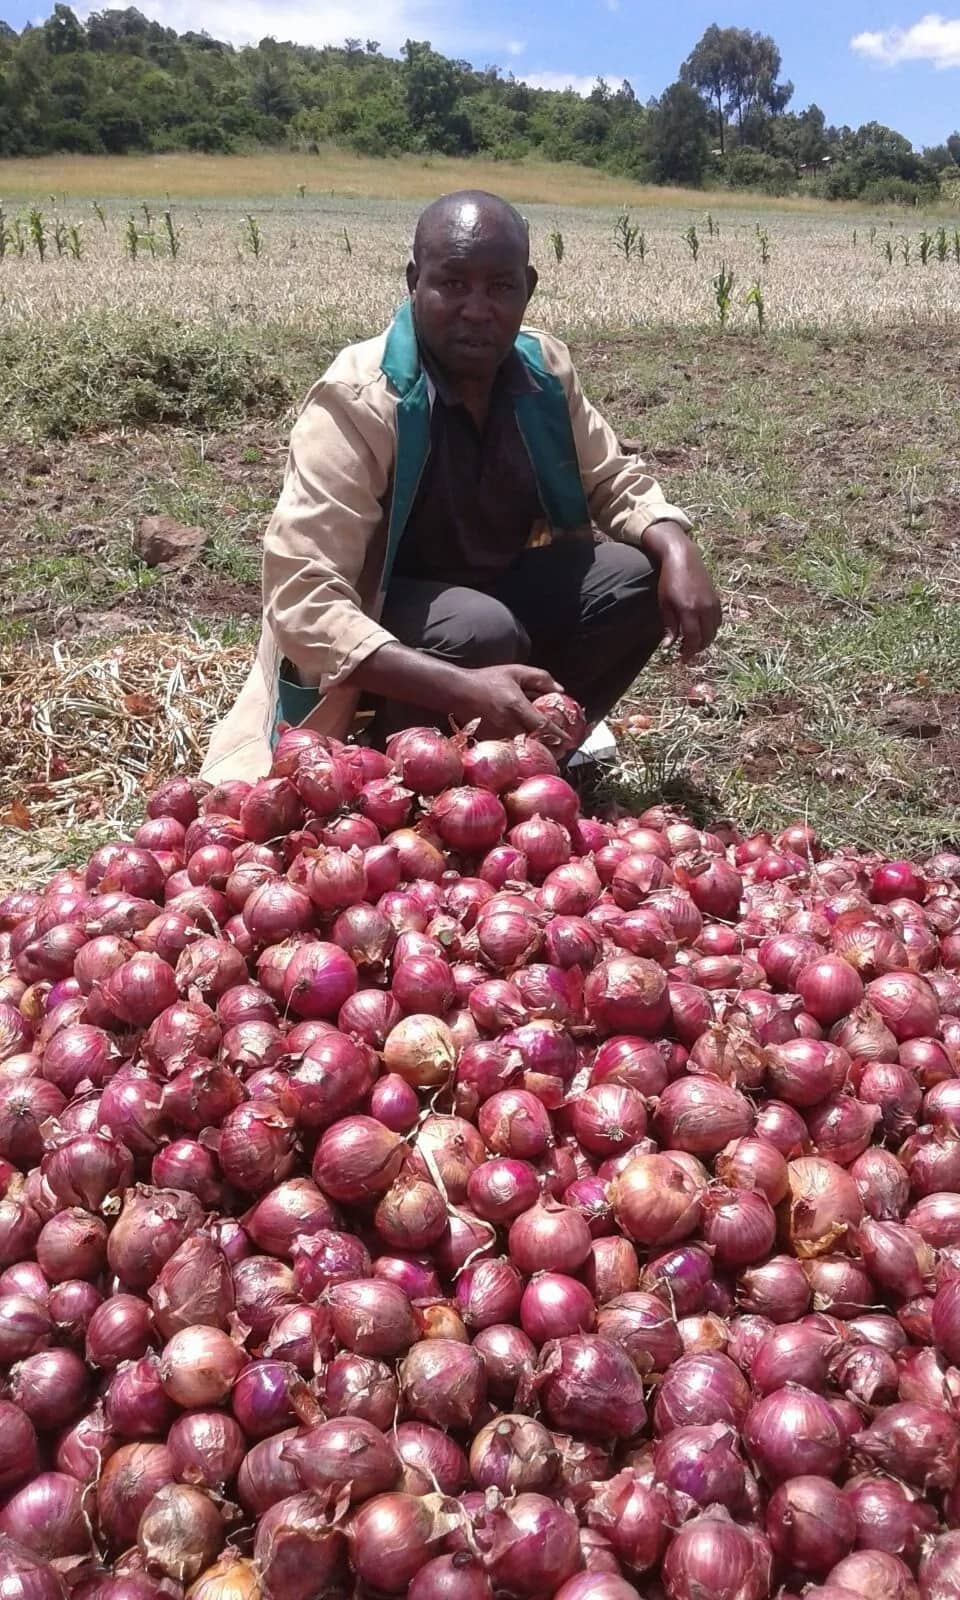 Greenhouse onion farming in Kenya